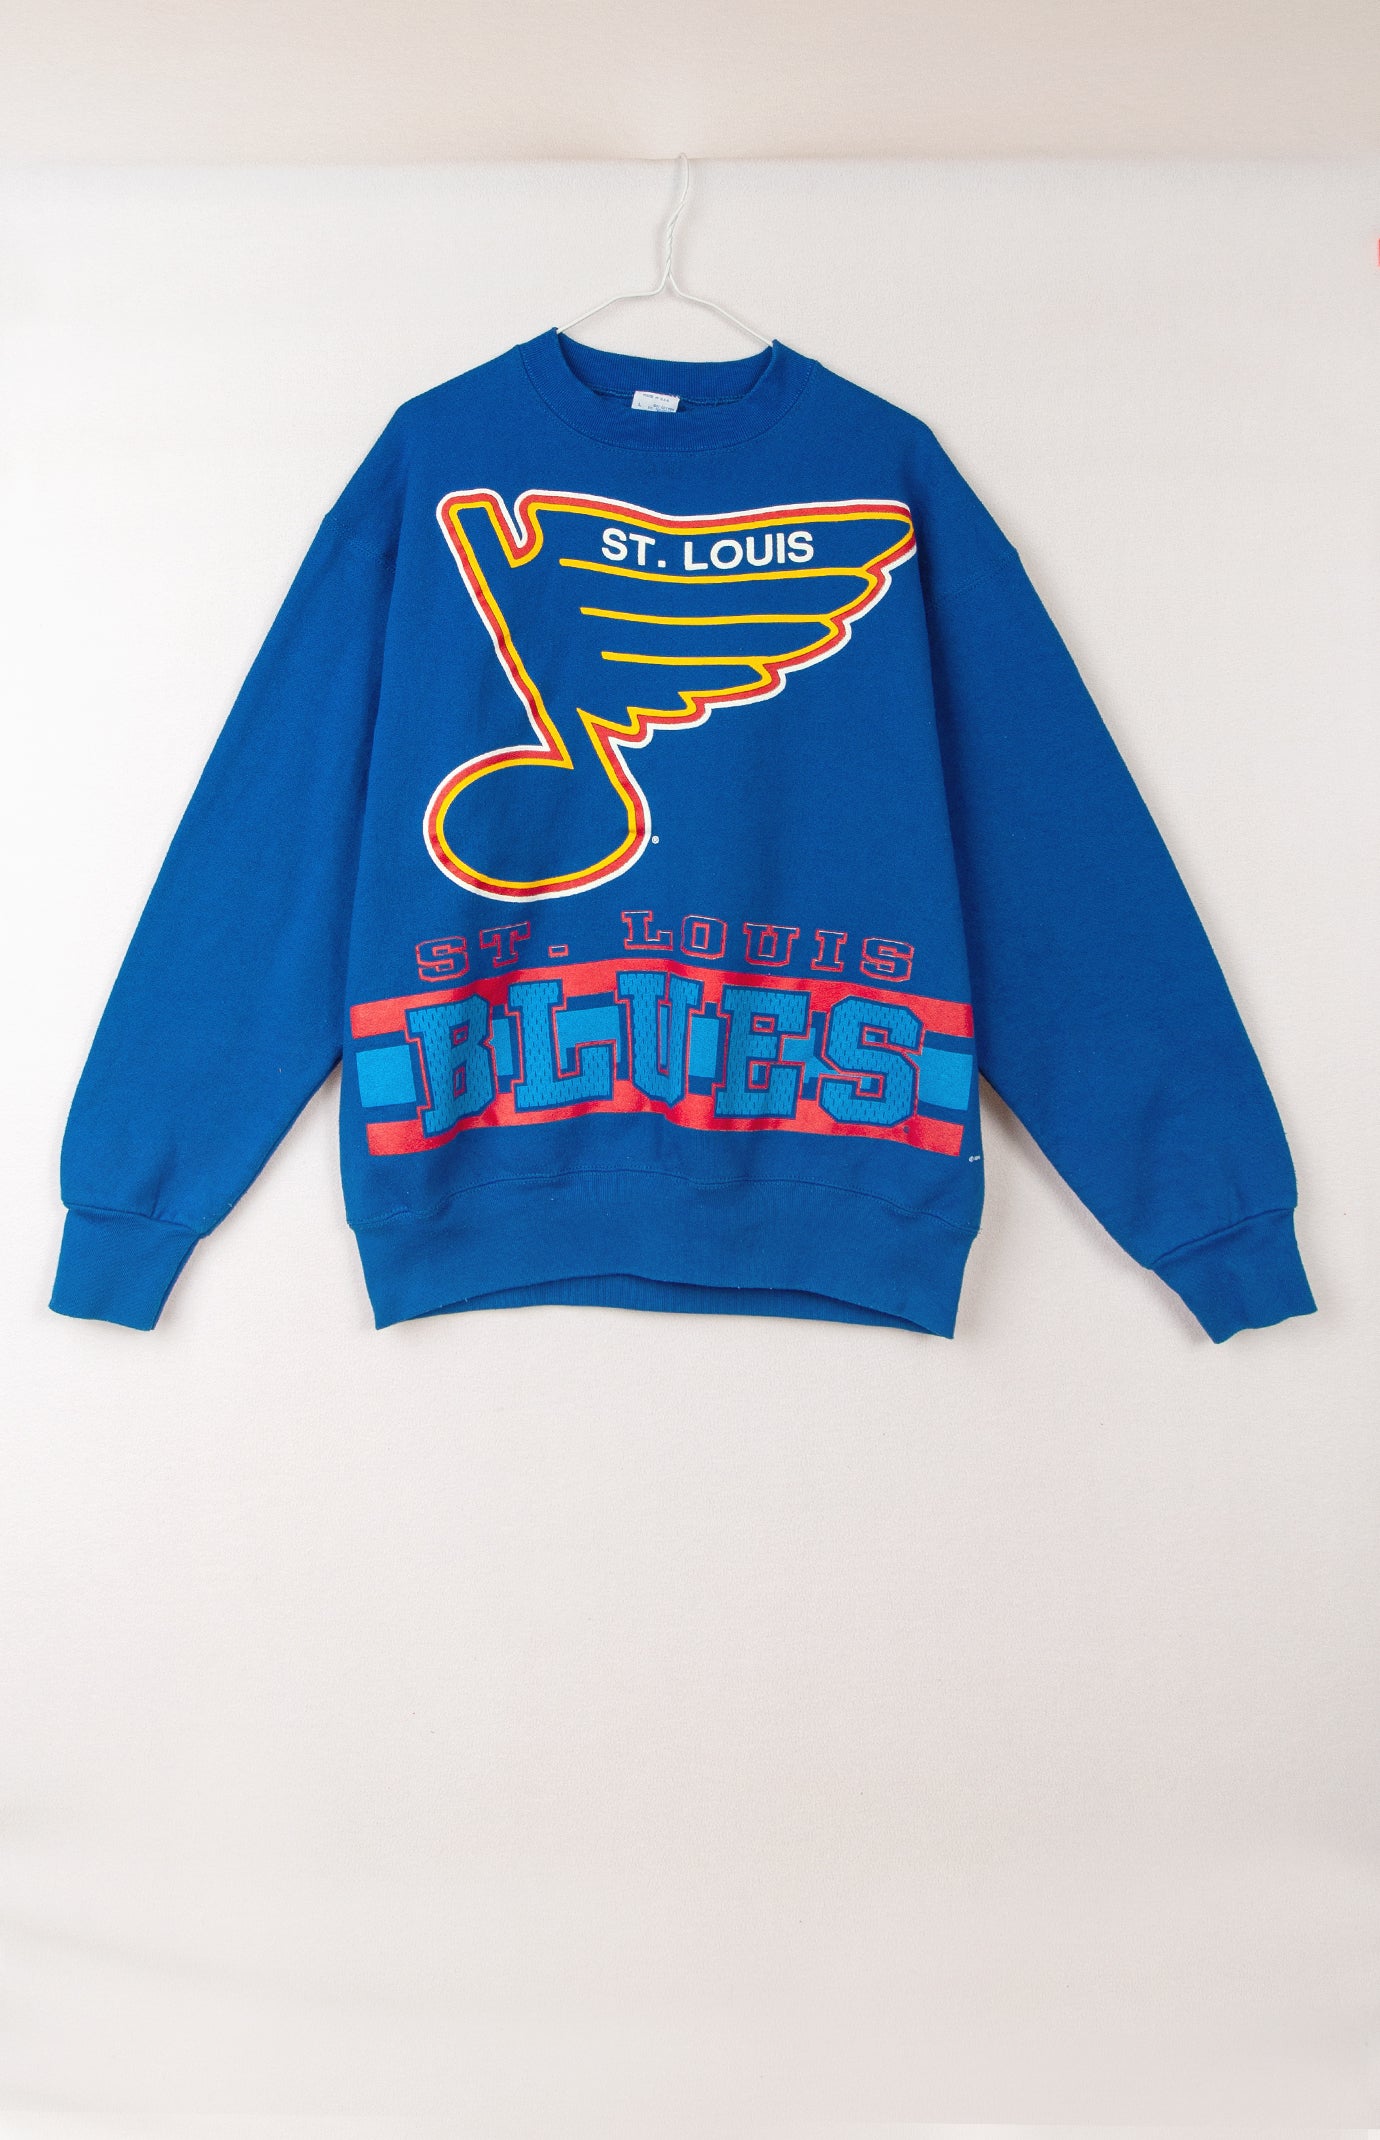 Vintage '91 Nutmeg St Louis Blues Sweatshirt (XL) – Different Vibe